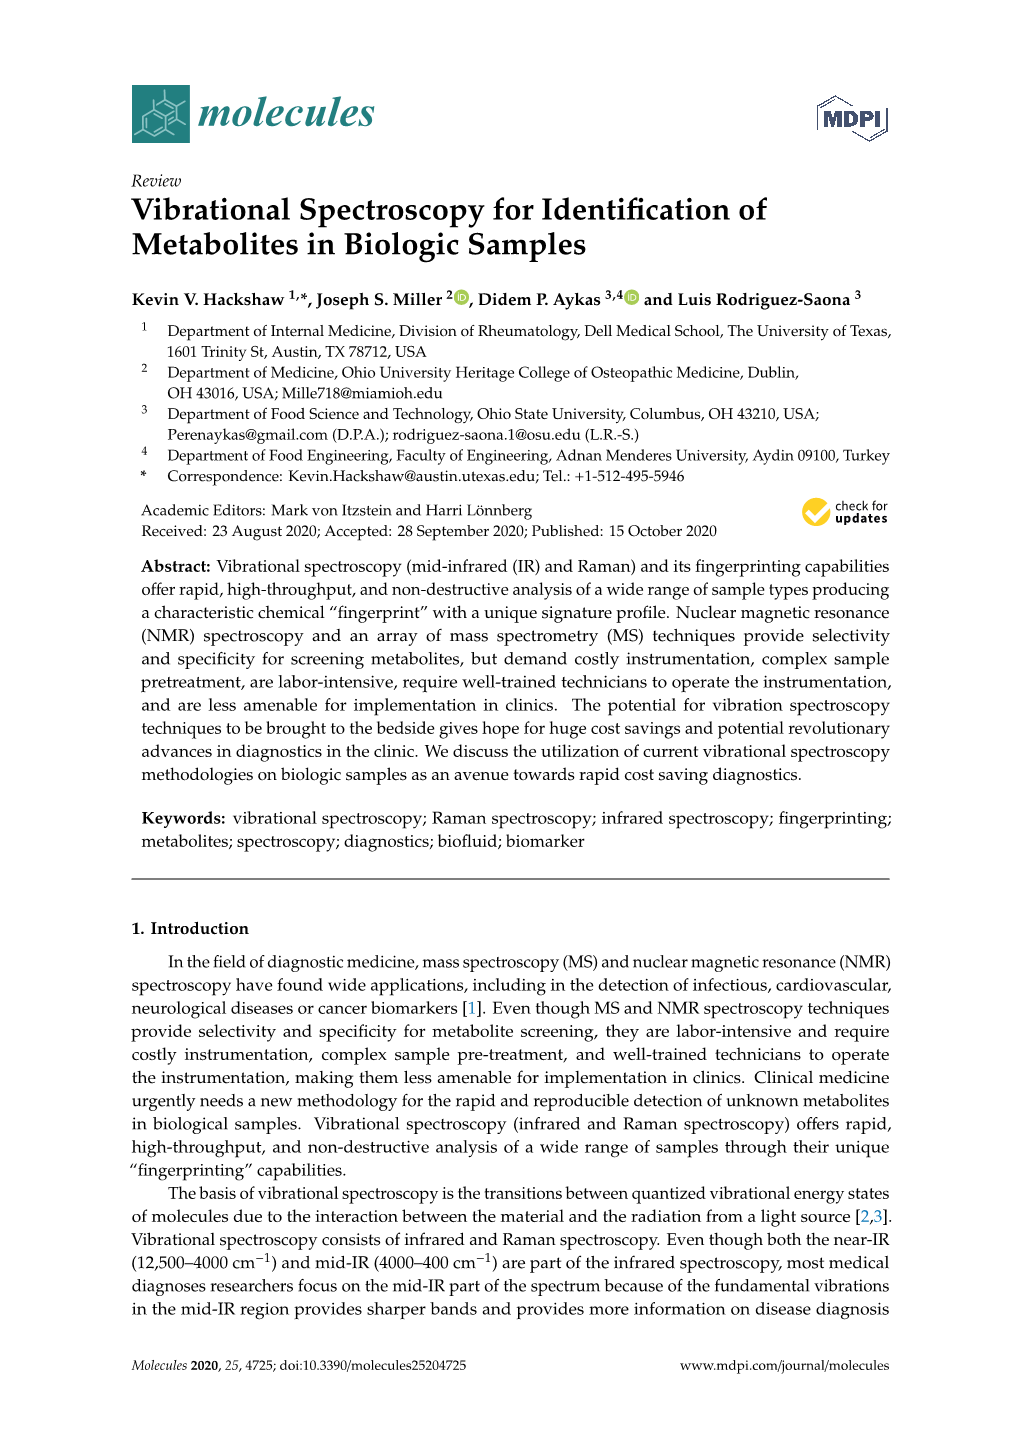 Vibrational Spectroscopy for Identification of Metabolites